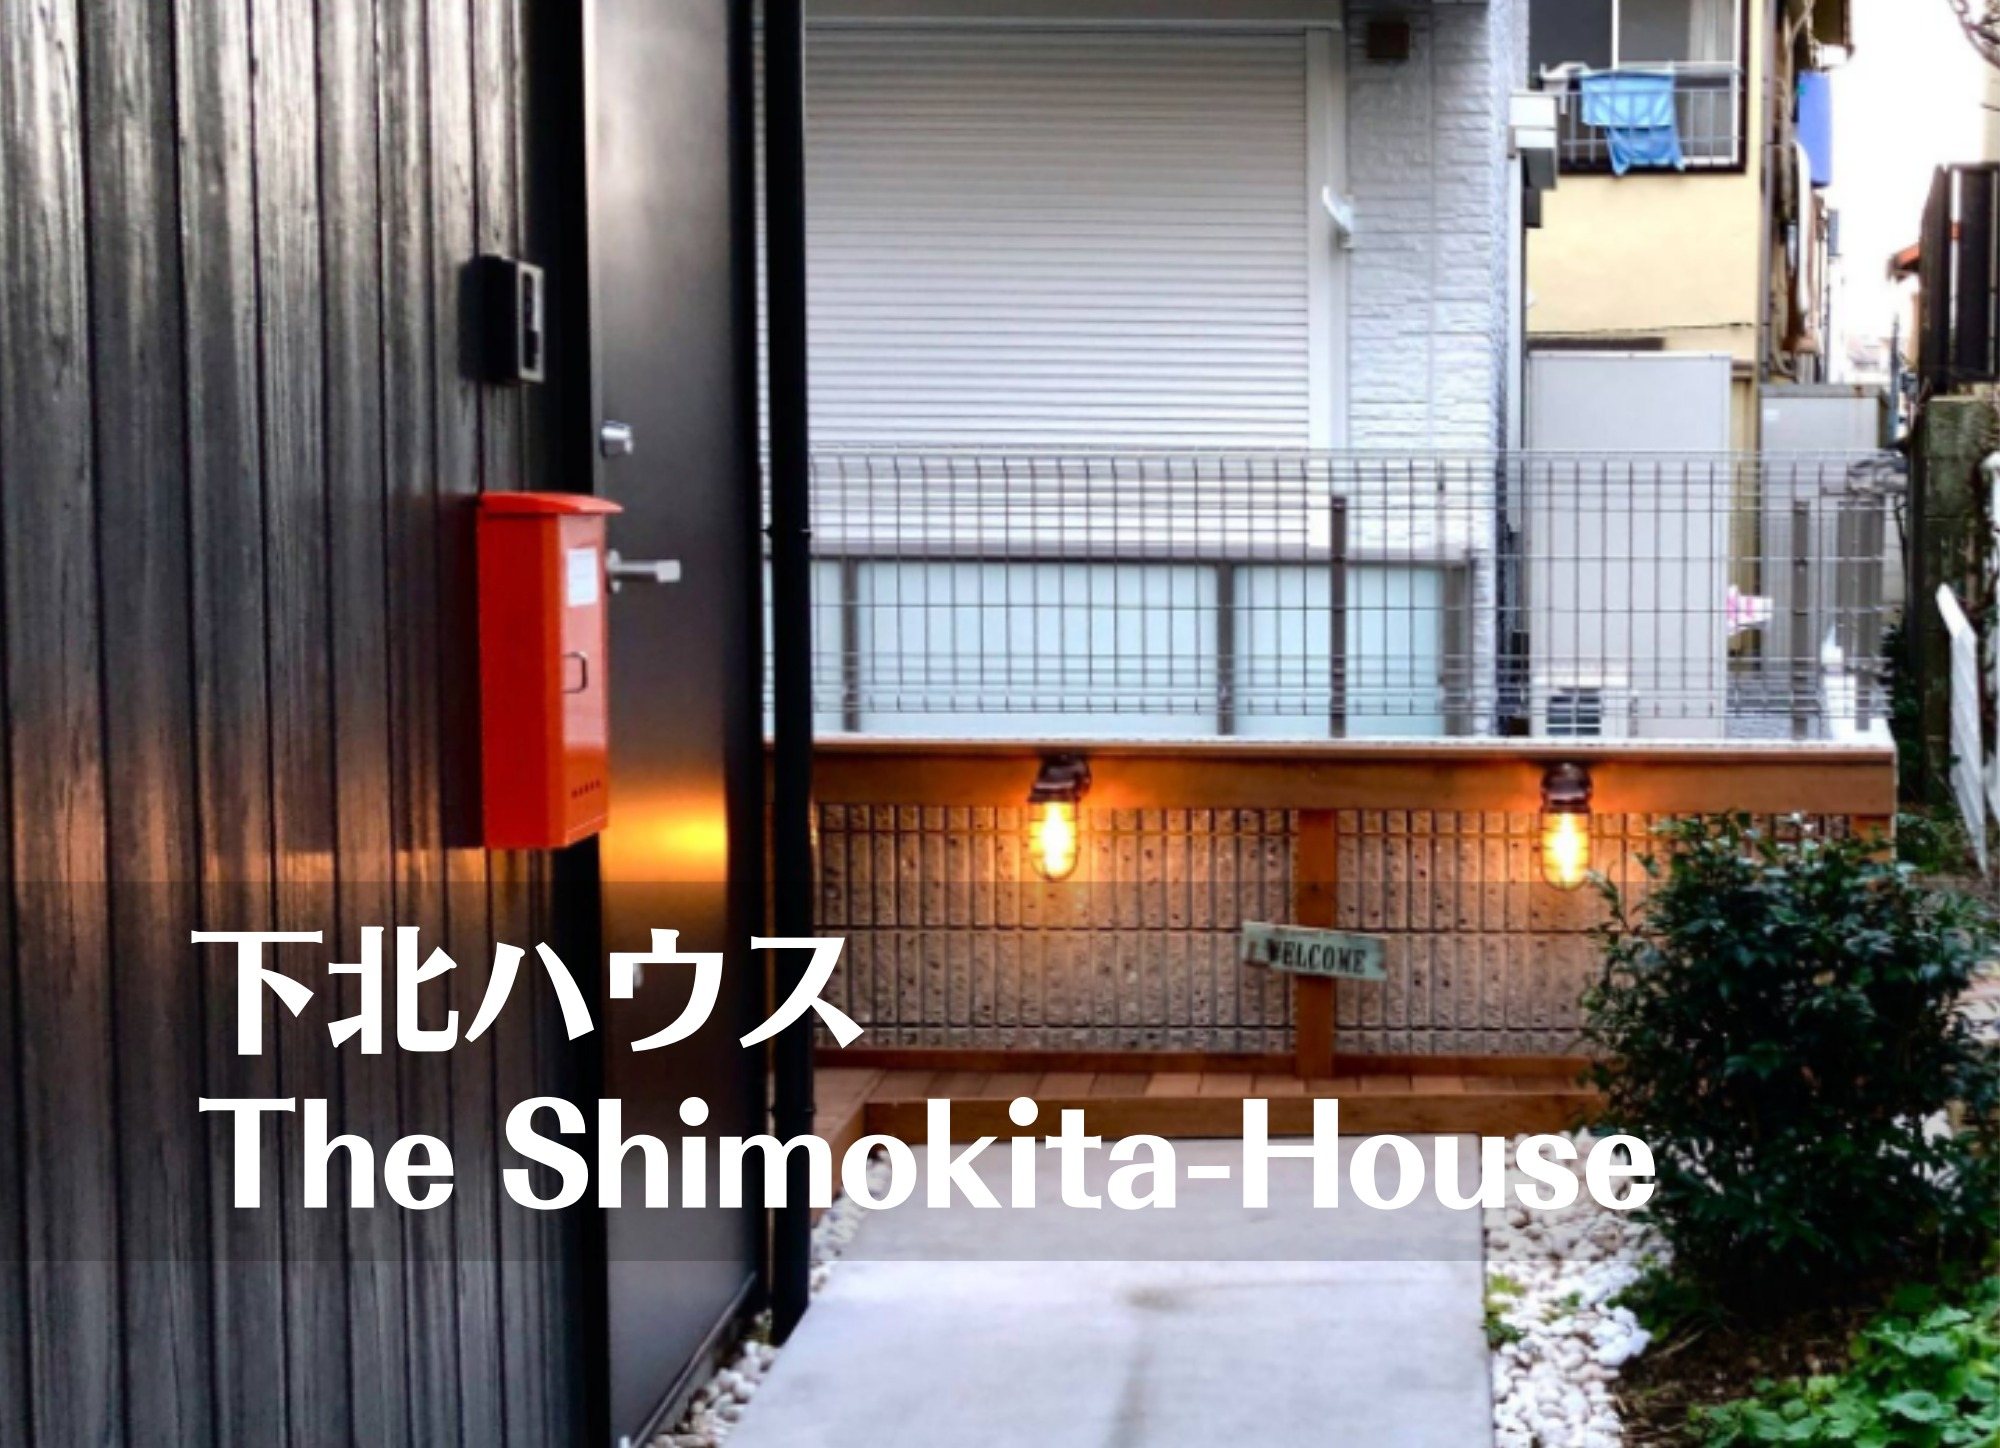 SHIMOKITAZAWA HOUSE